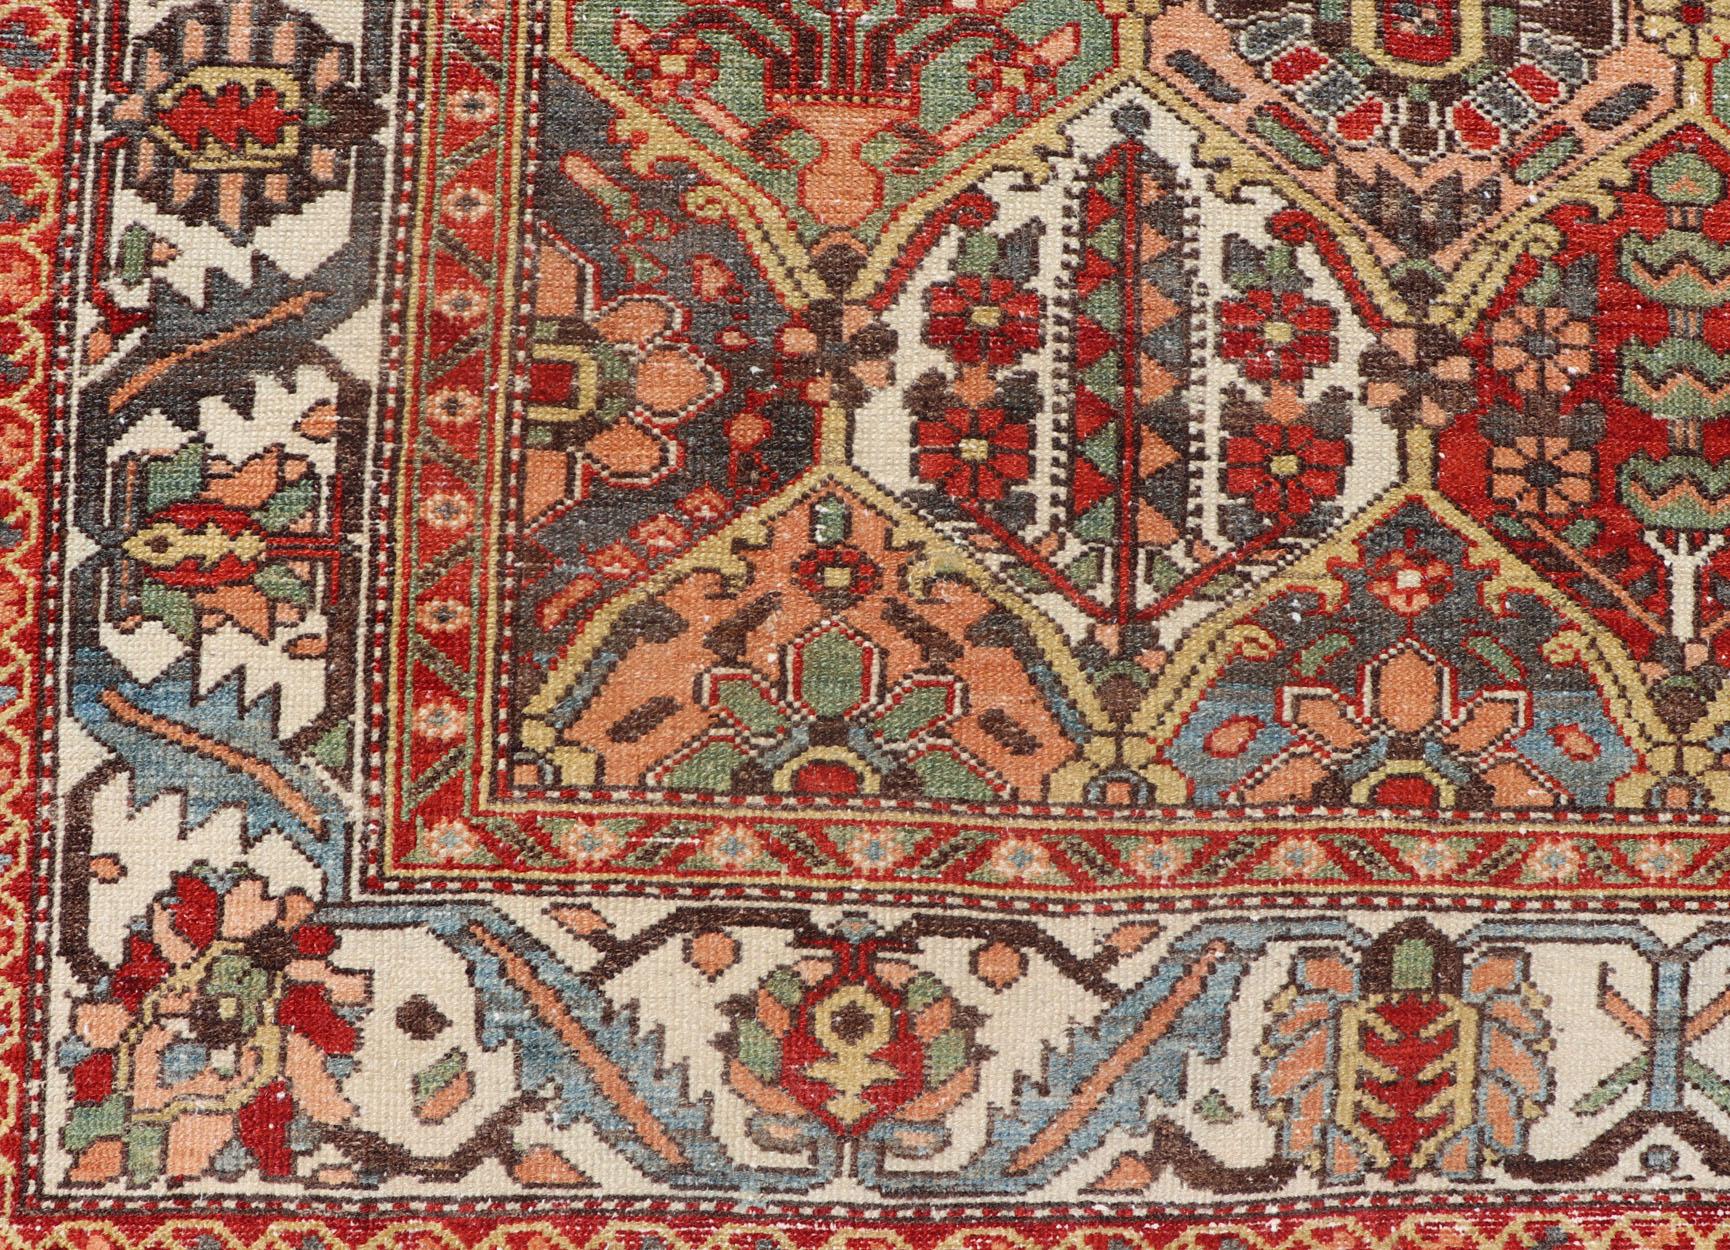 Tribal Antique Persian Diamond Garden Design Bakhtiari Rug in Multi Colors For Sale